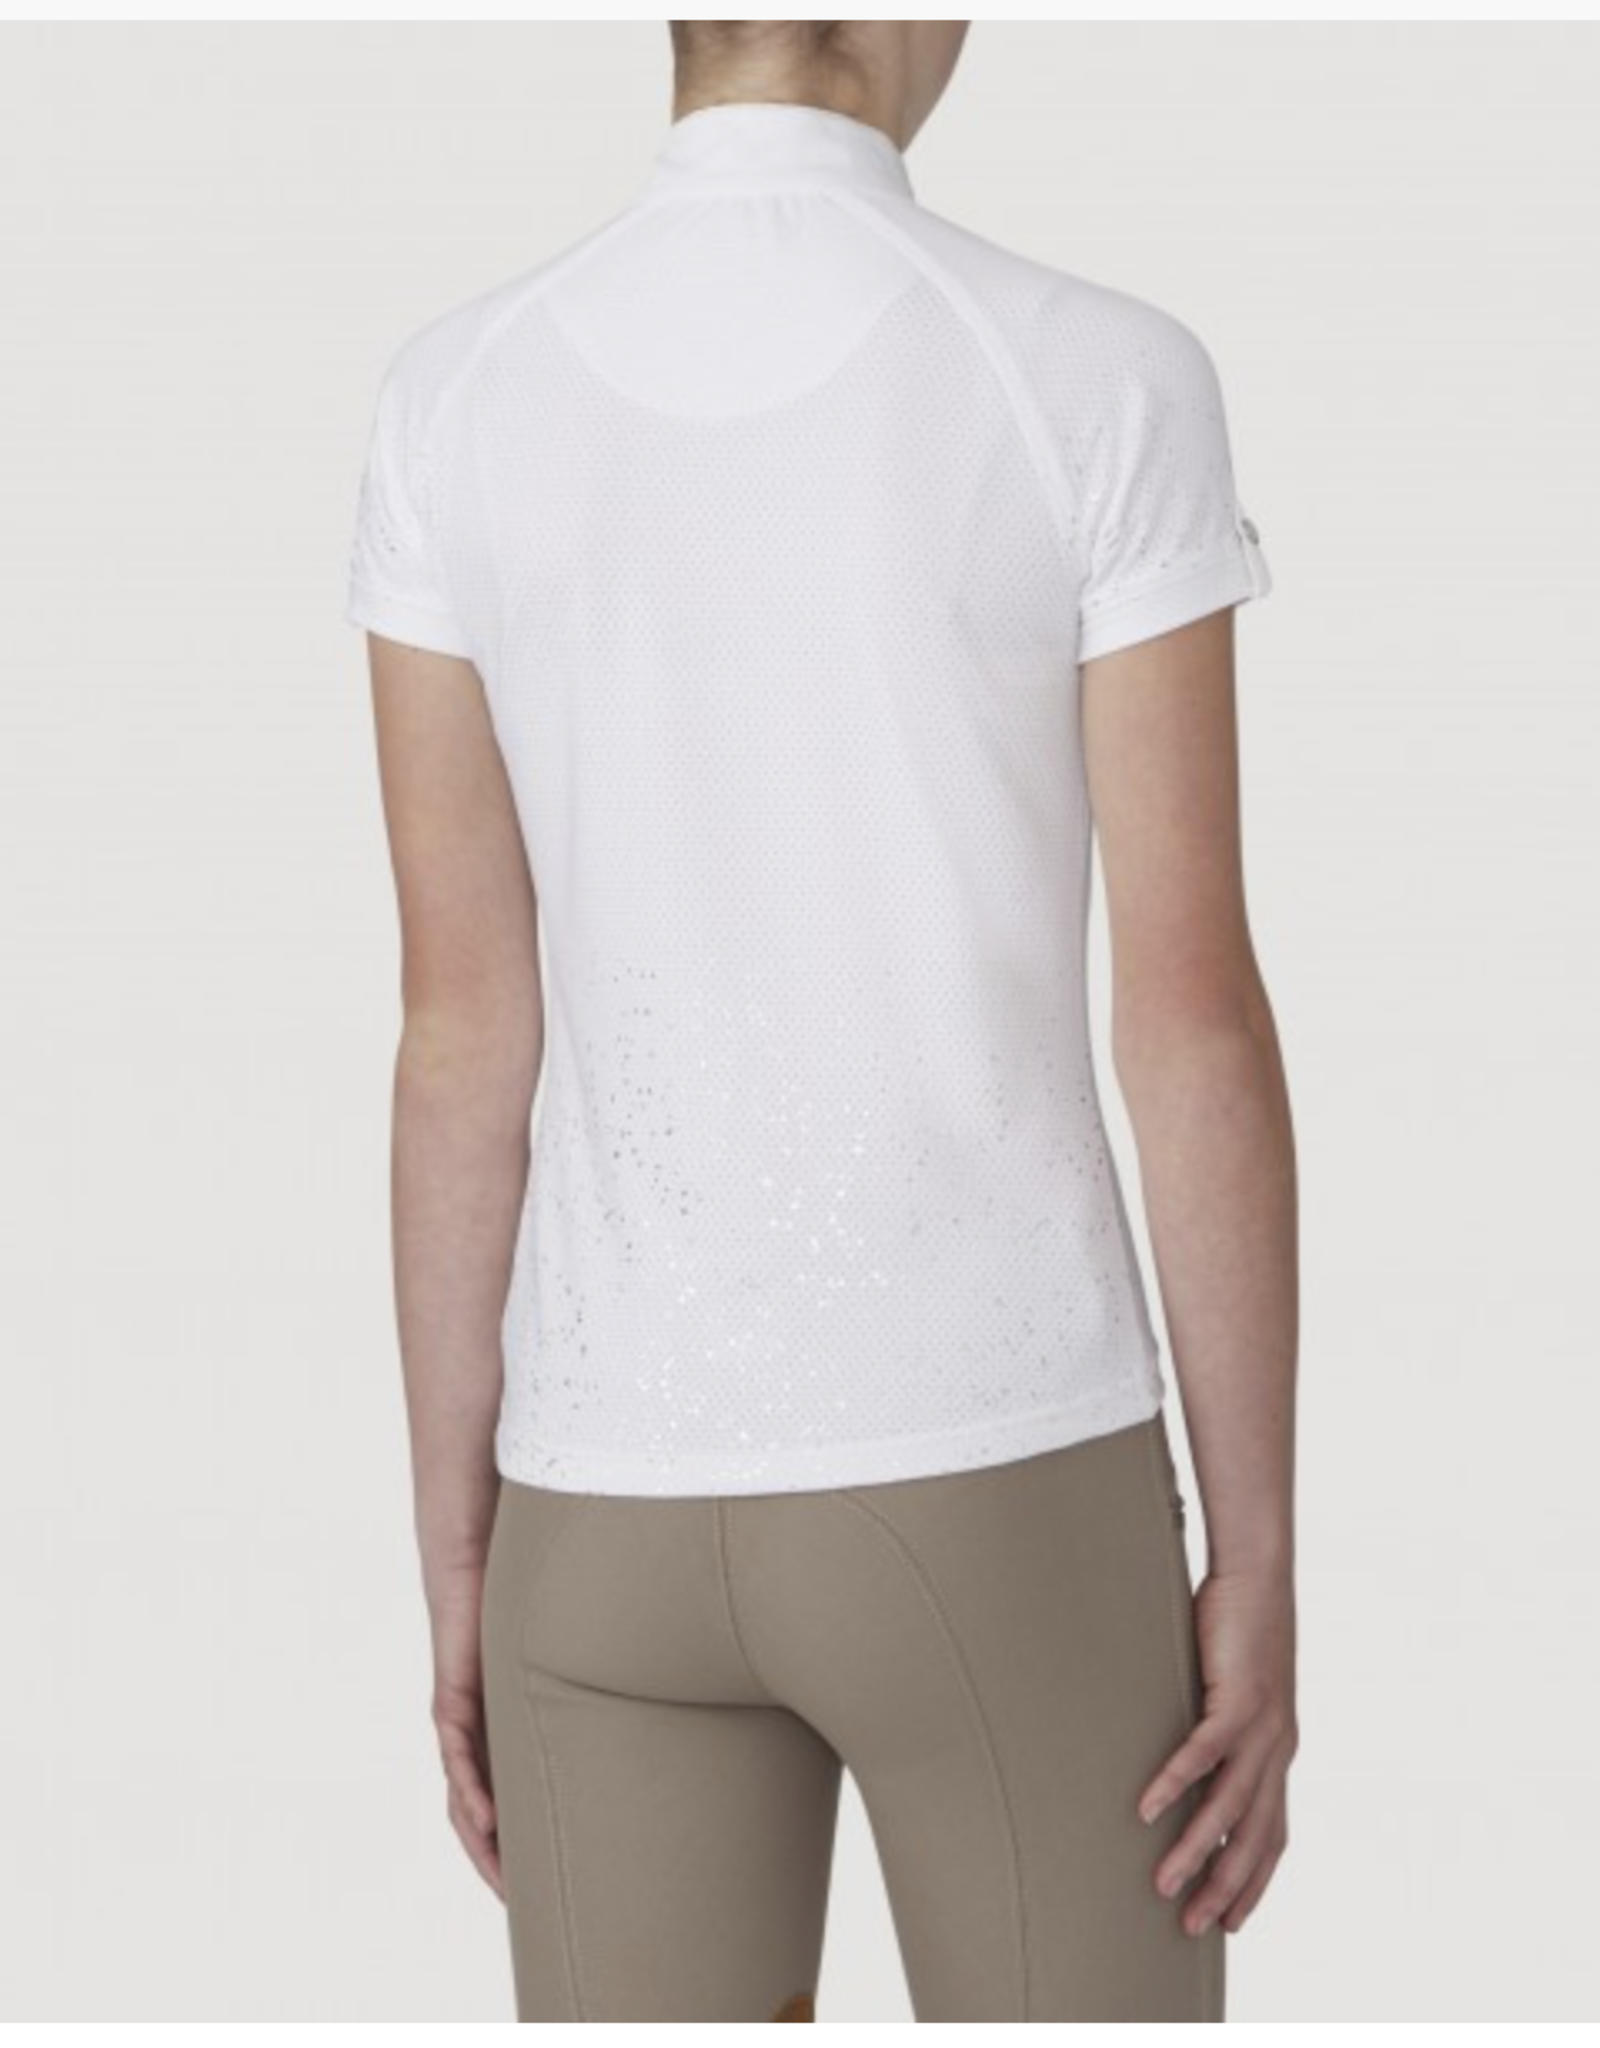 Romfh Ladies' Sparkle Short Sleeve Show Shirt